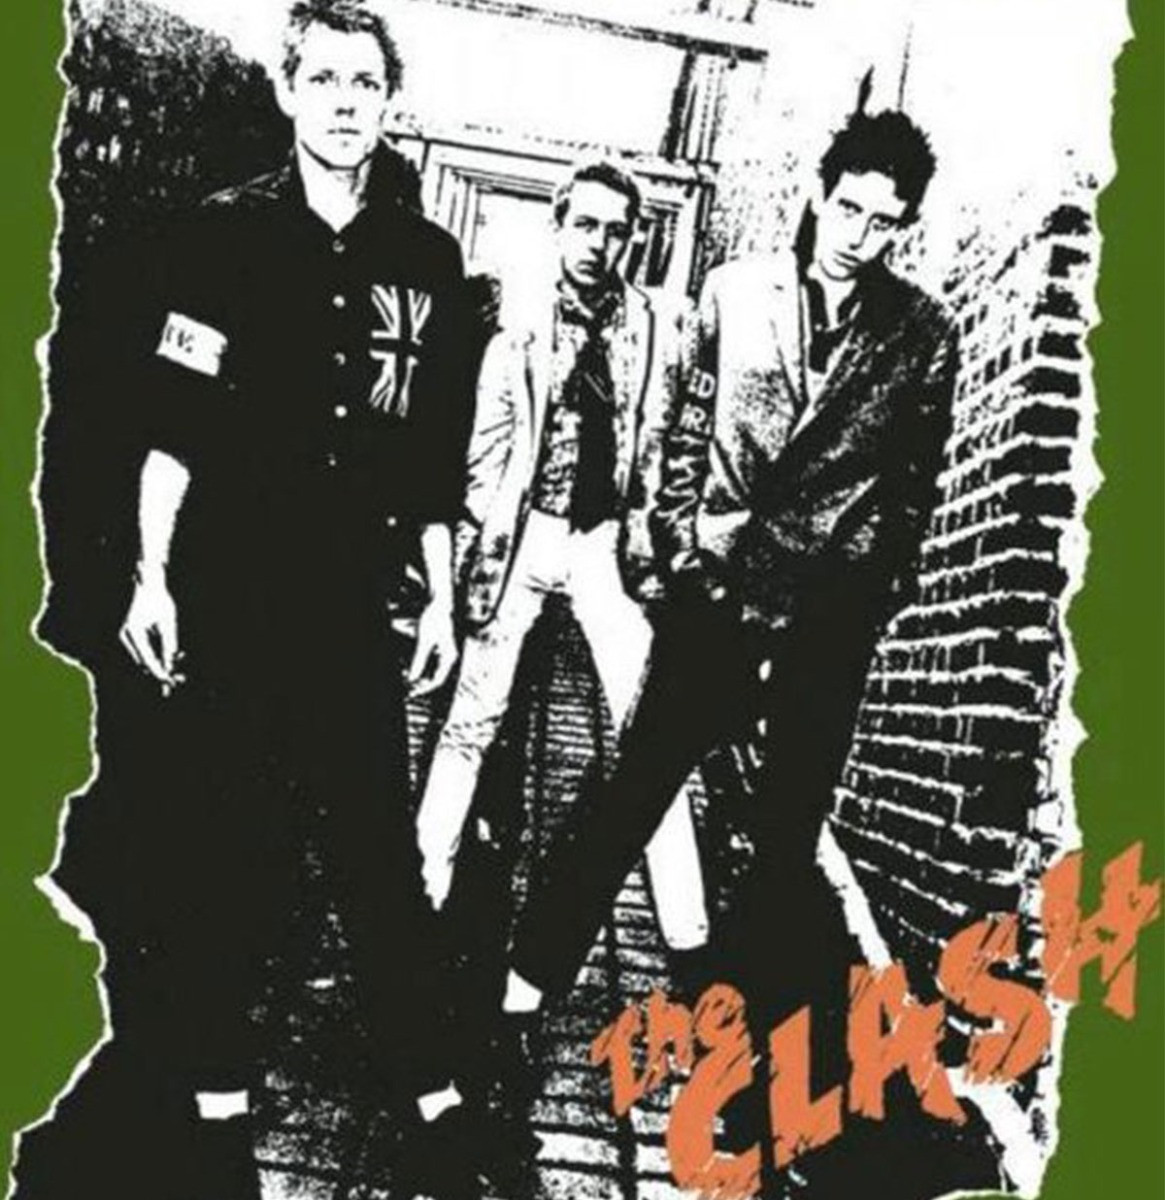 The Clash - The Clash LP